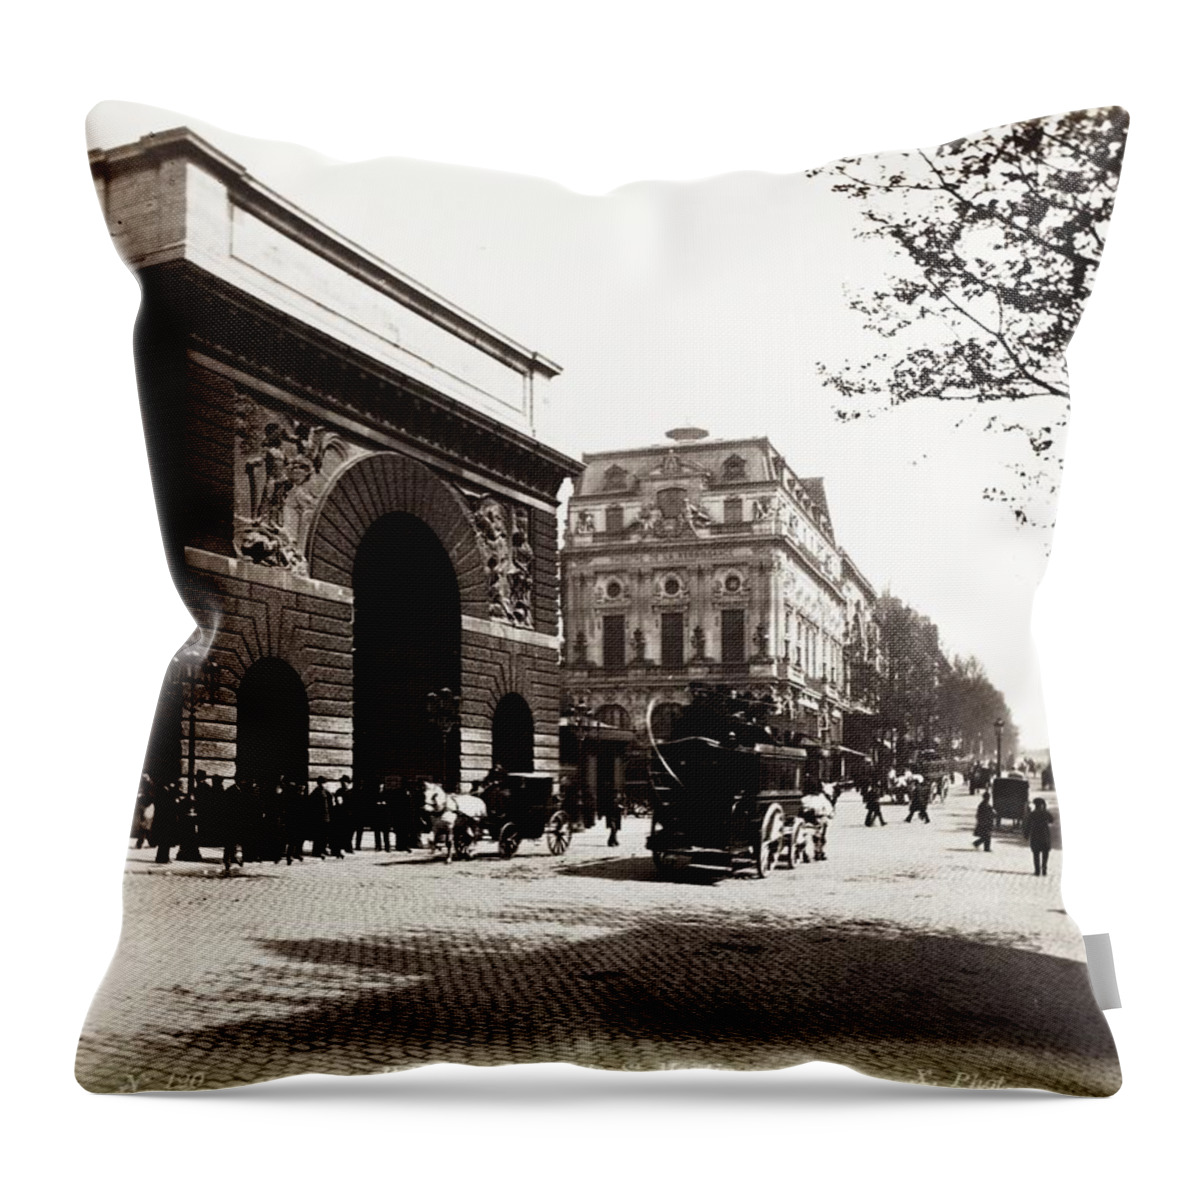 Triumphal Arch Throw Pillow featuring the painting Porte Saint-Martin, Boulevard Saint-Martin, Paris ca. 1890 by Vincent Monozlay